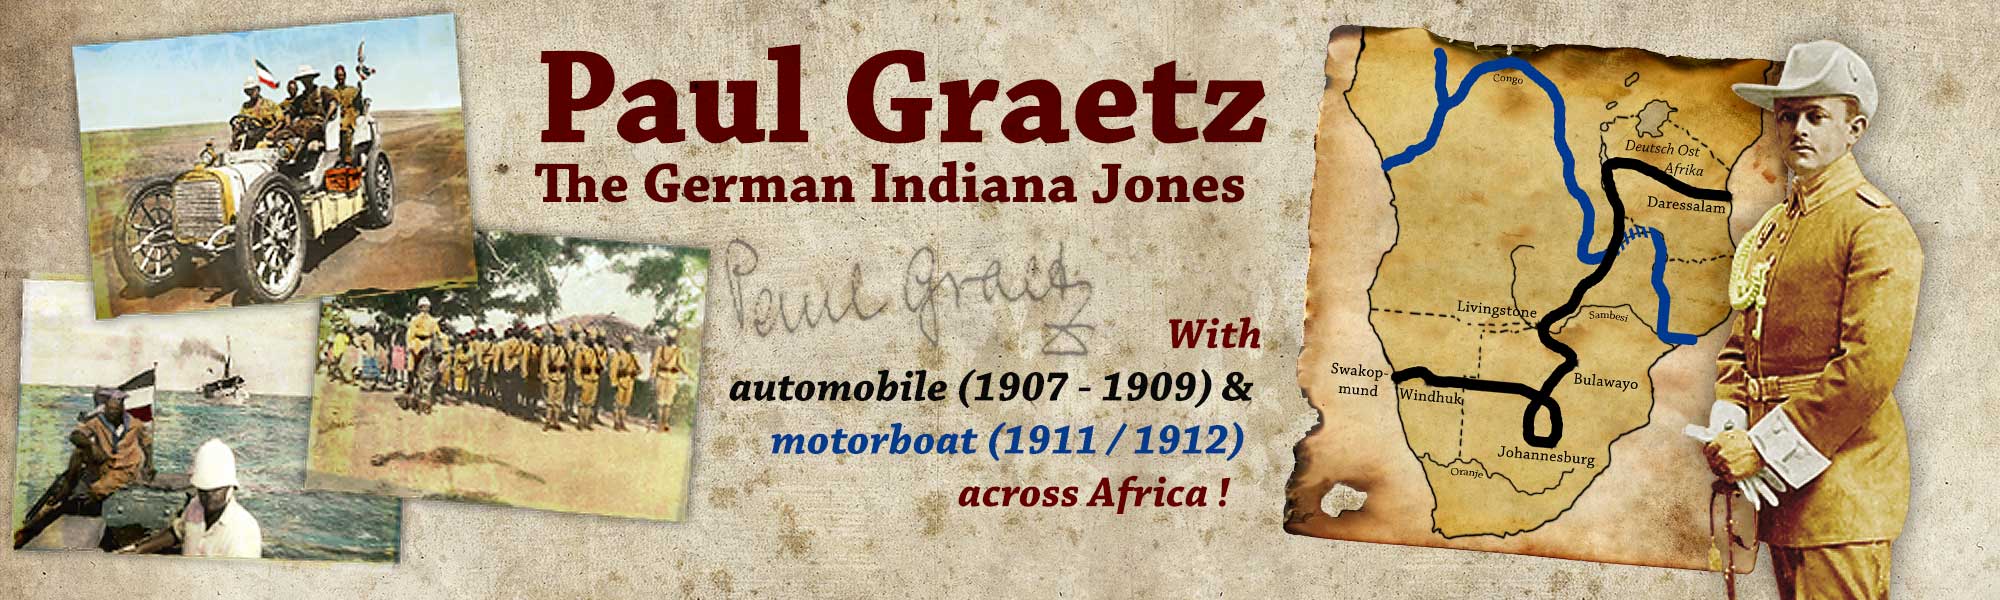 Paul Graetz website